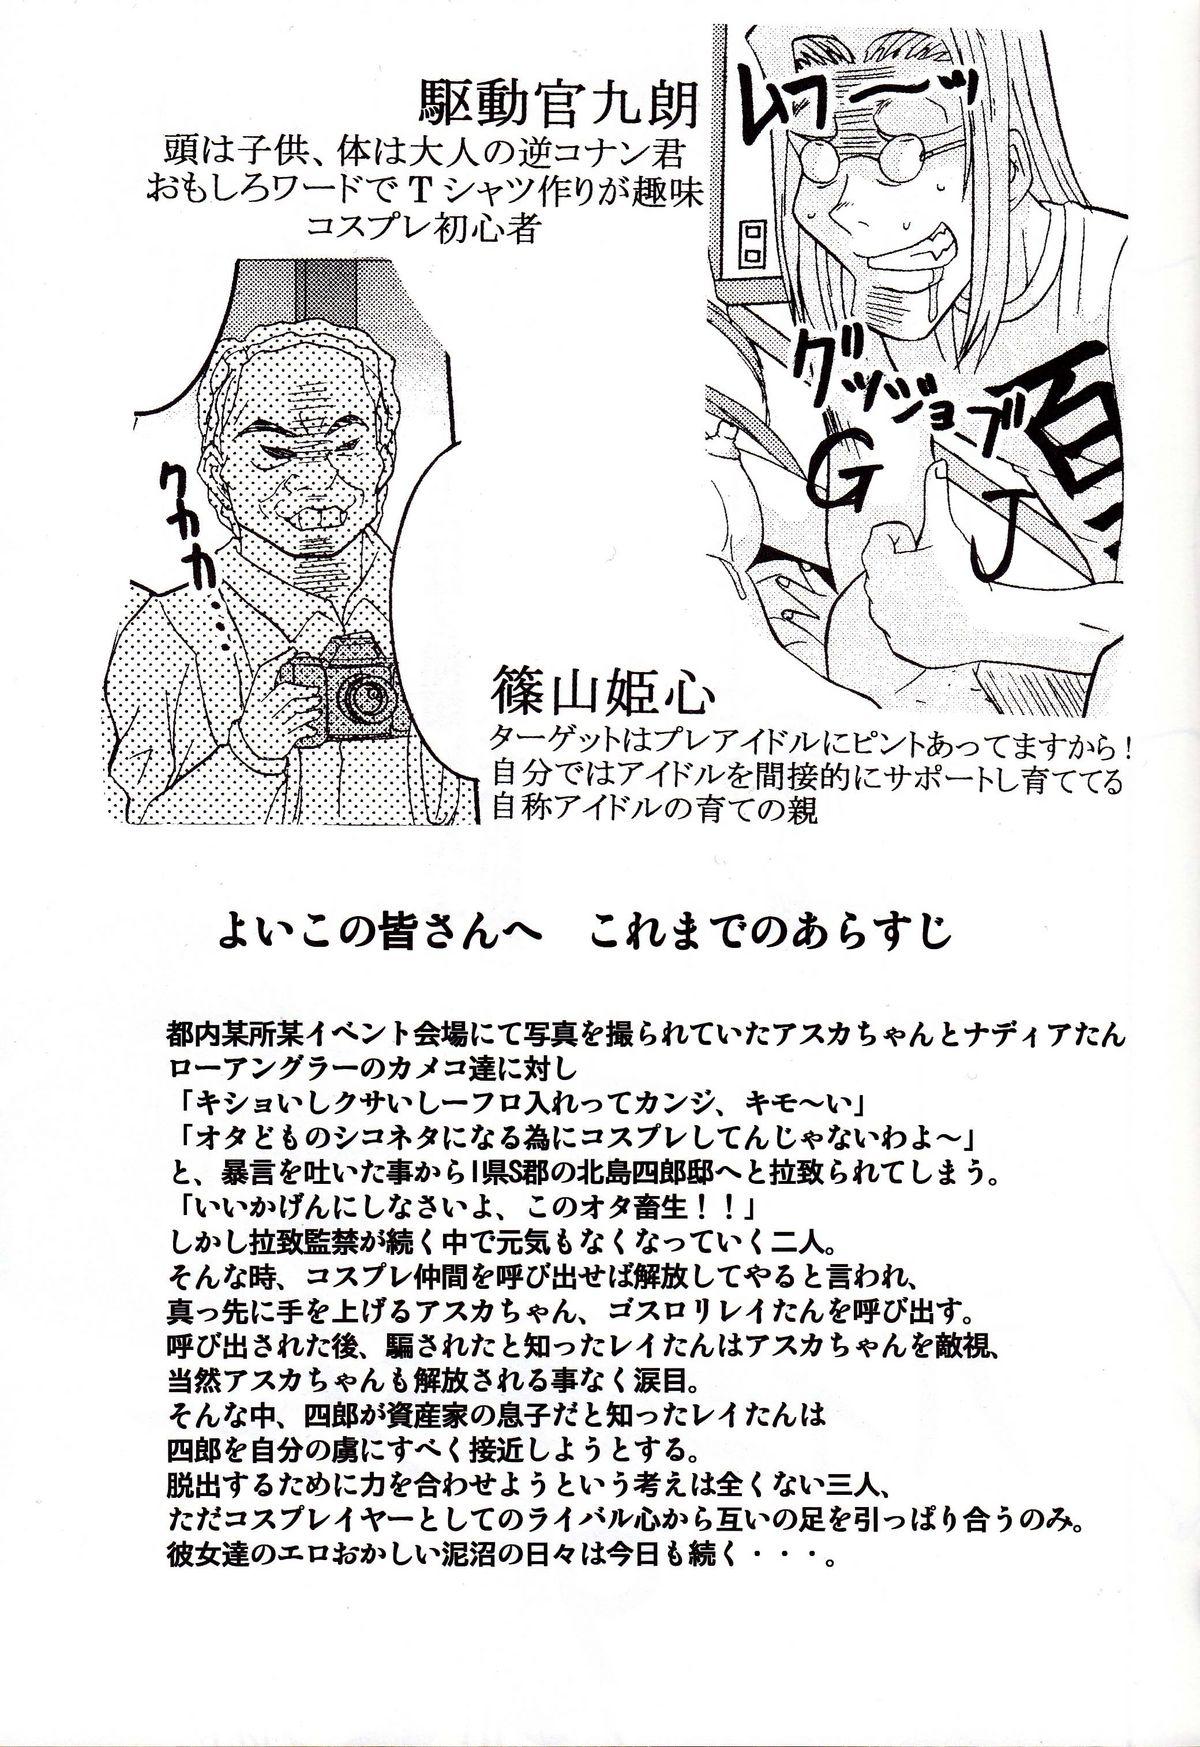 Hot Whores Hi Energy 9 - Neon genesis evangelion Fushigi no umi no nadia Tease - Page 6